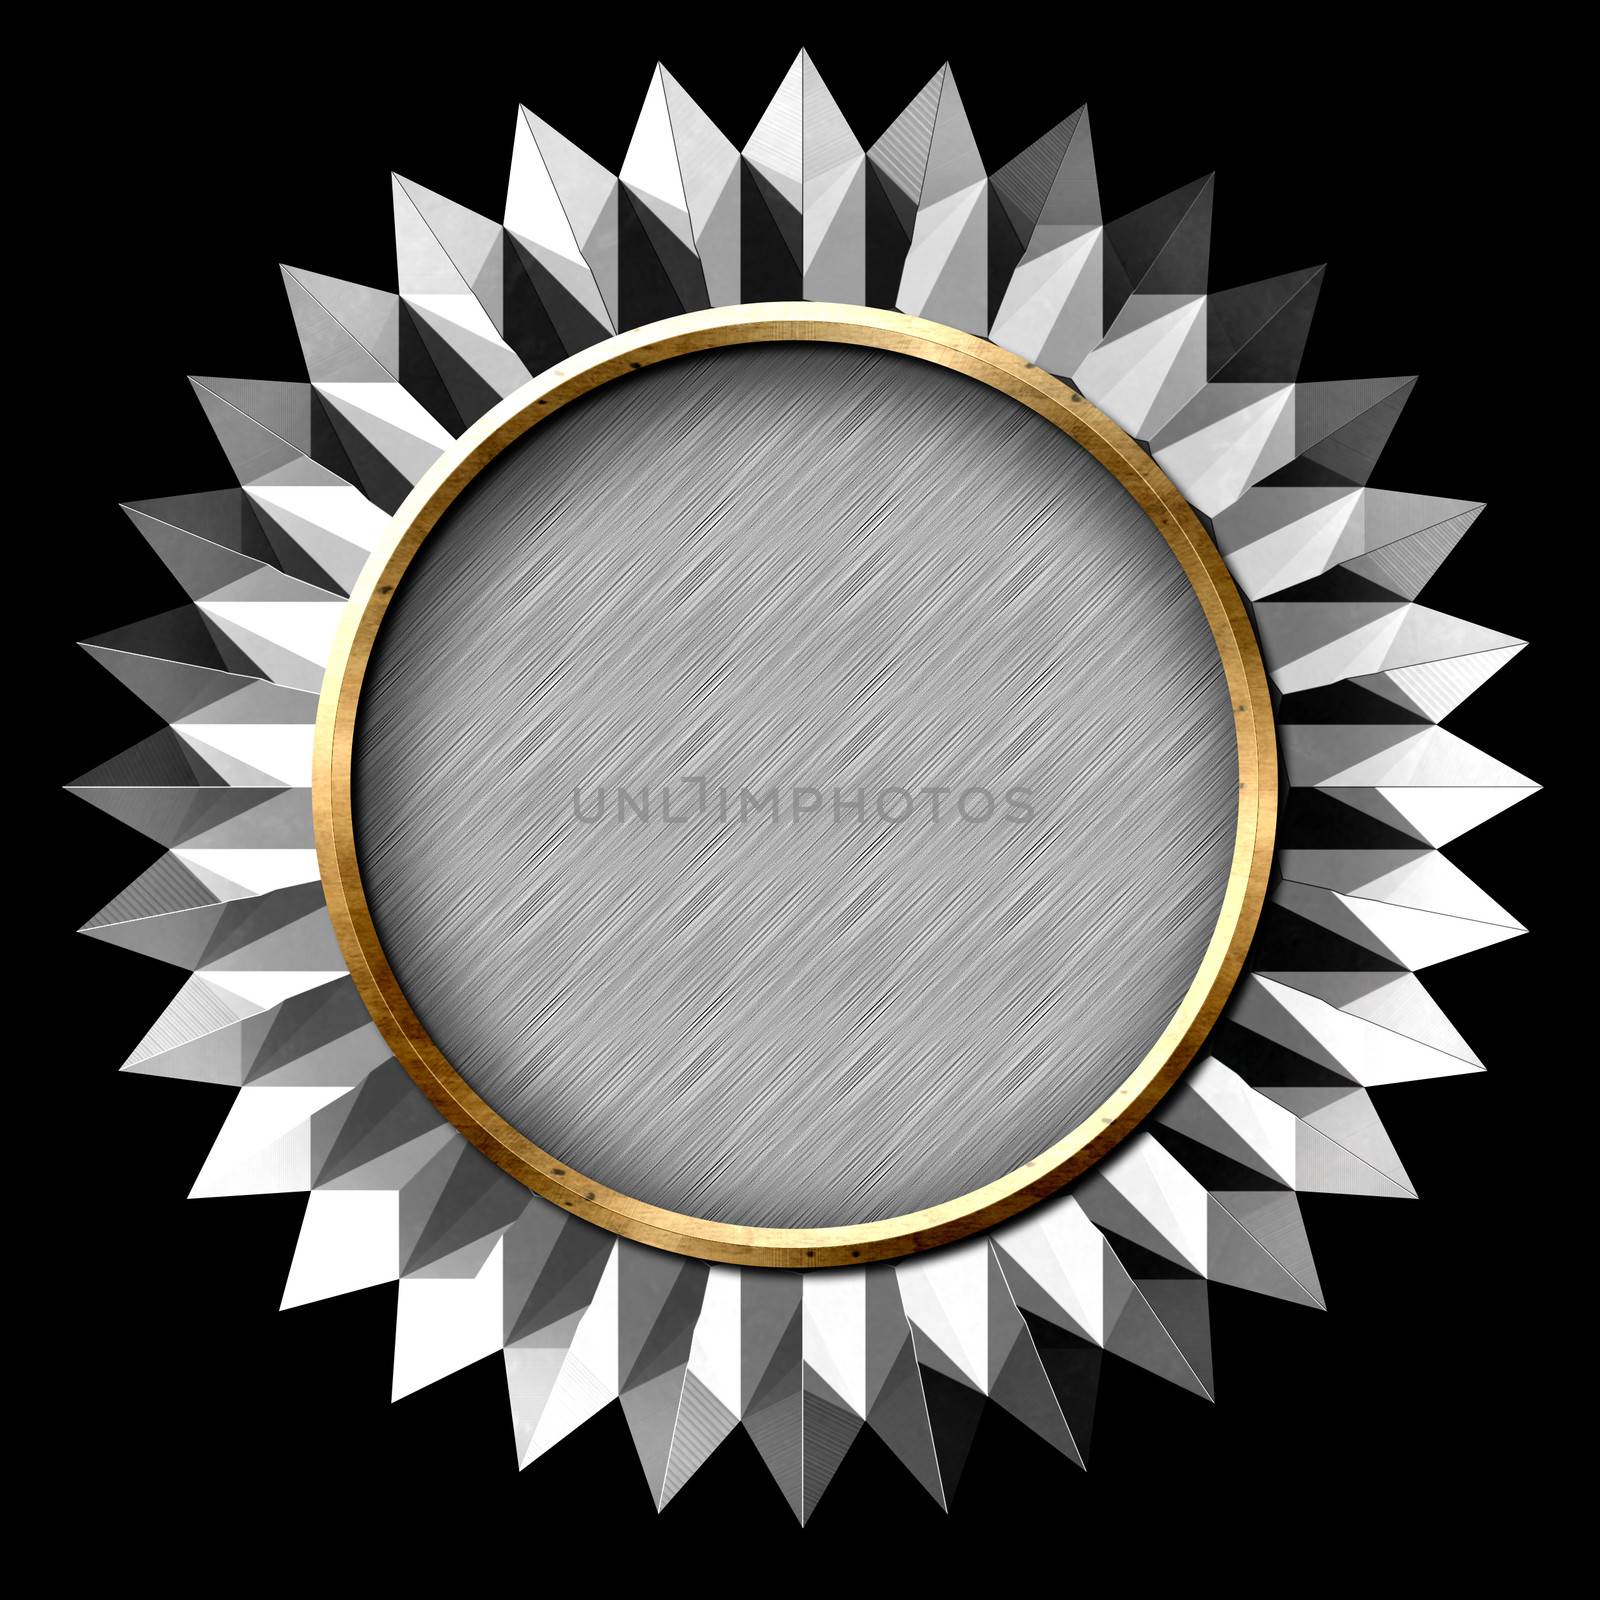 Silver platinum seal starburst star with black background.